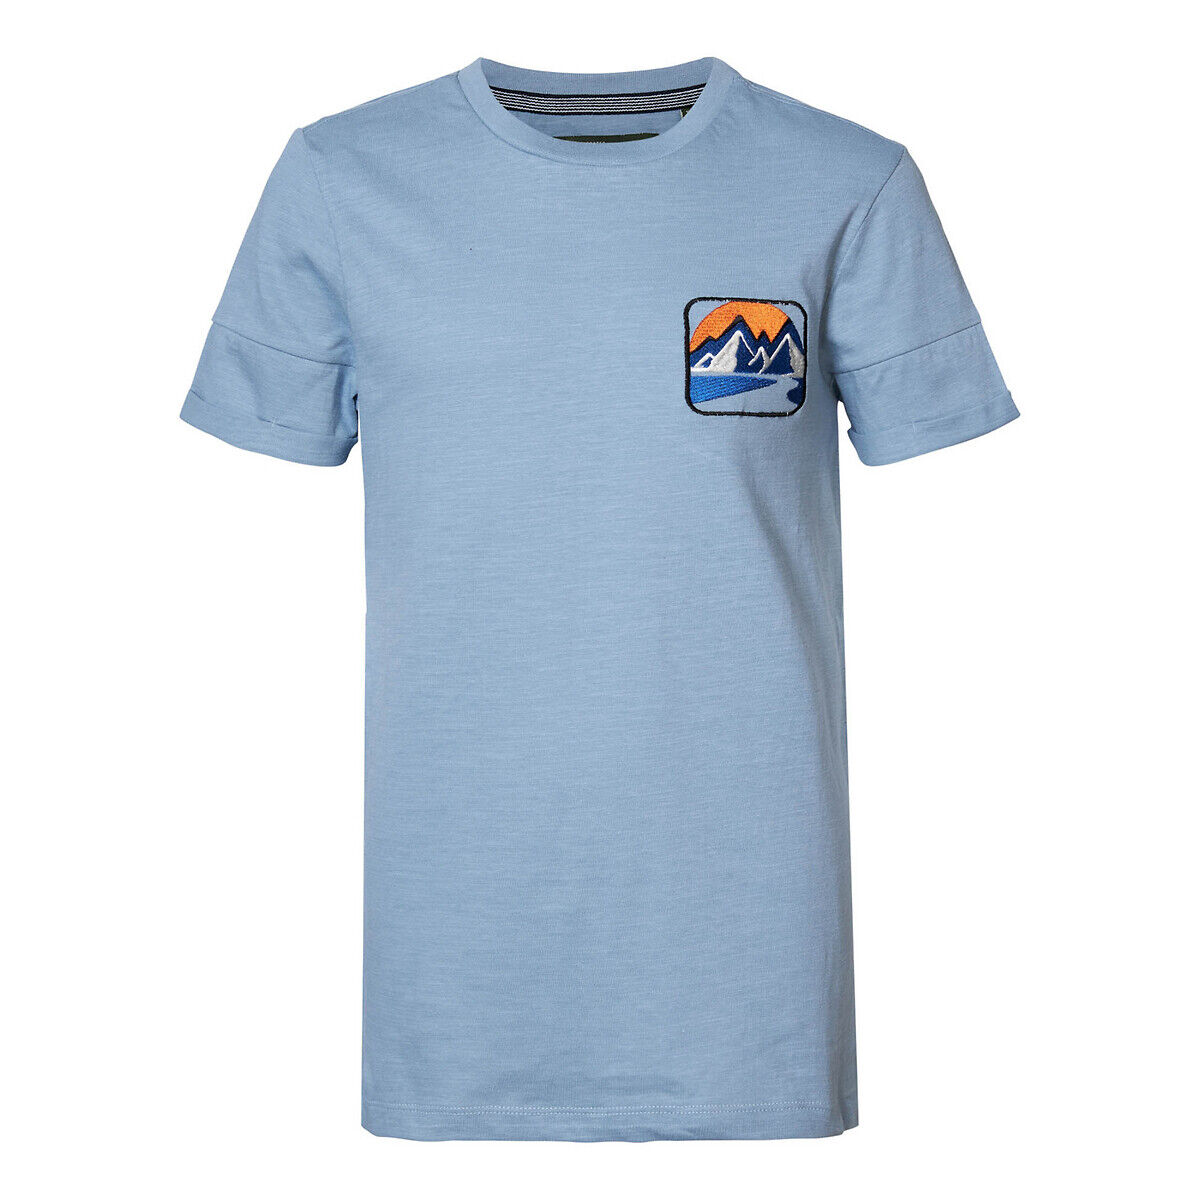 Petrol Industries T-shirt de mangas curtas, 8-16 anos   azul